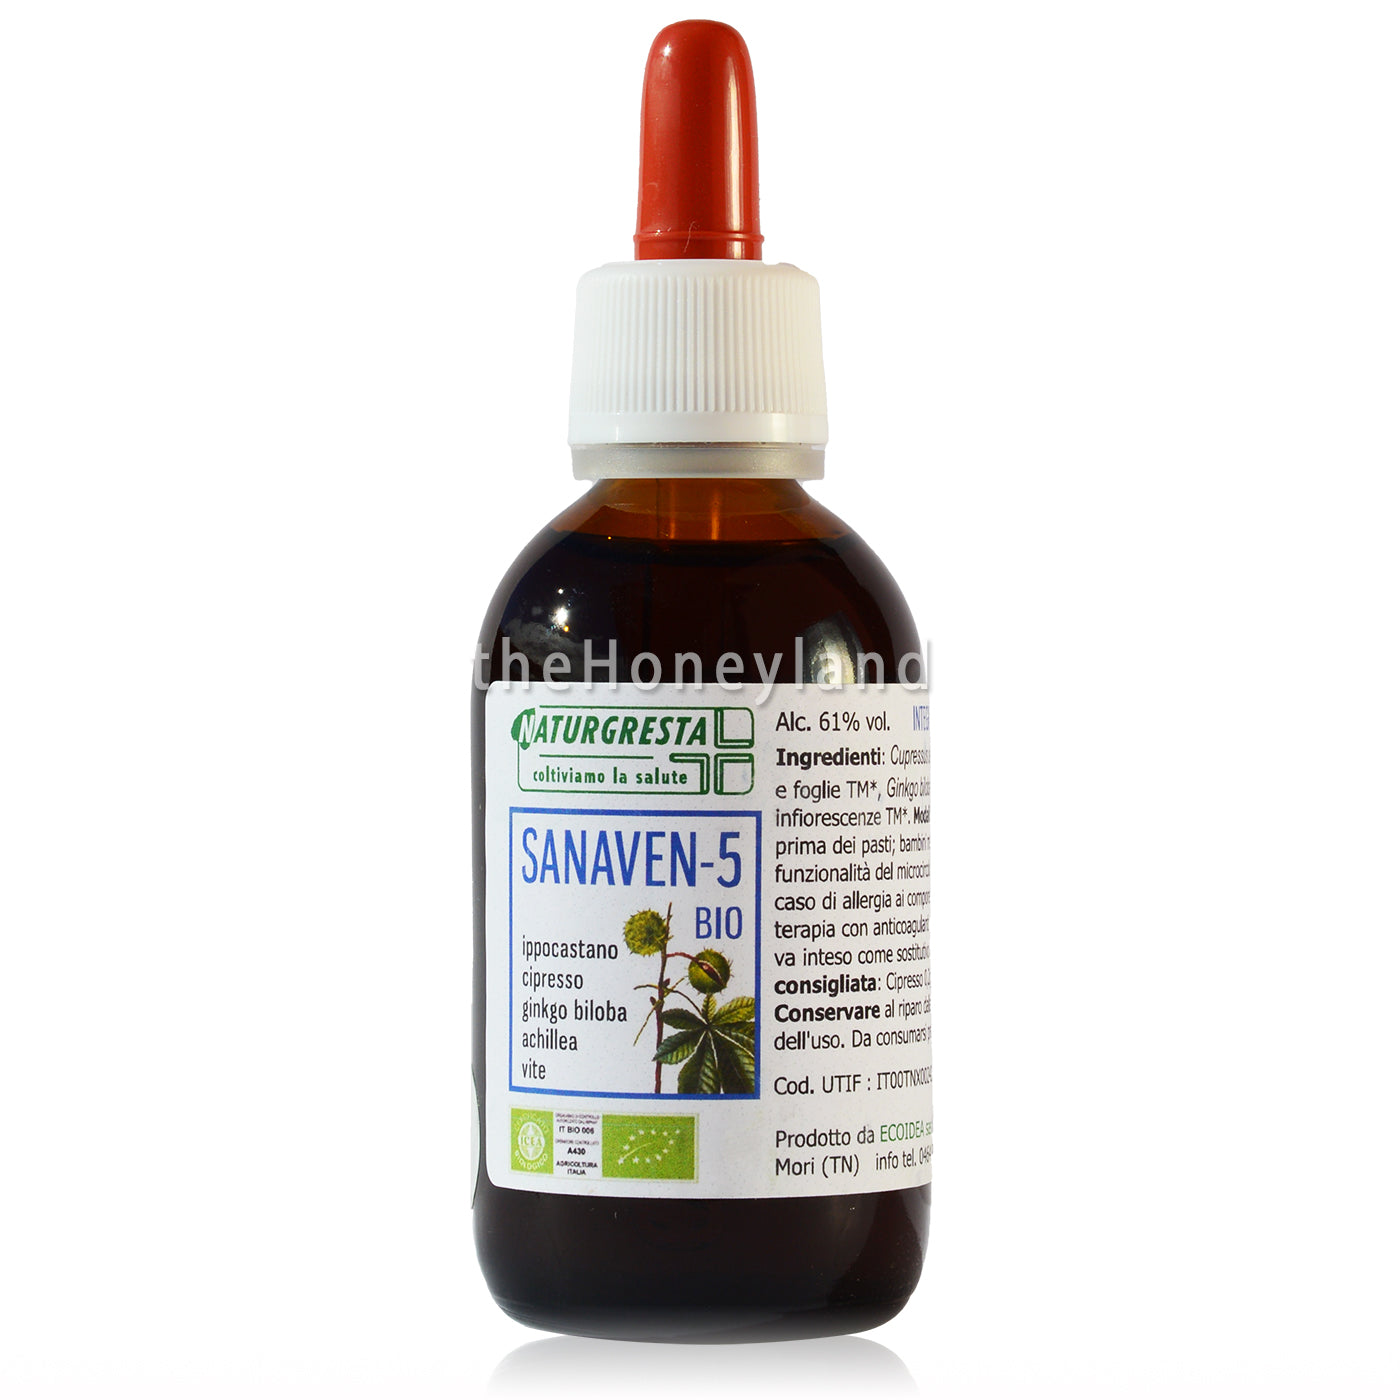 Sanaven-5 bio concentrated fluid heavy legs supplement